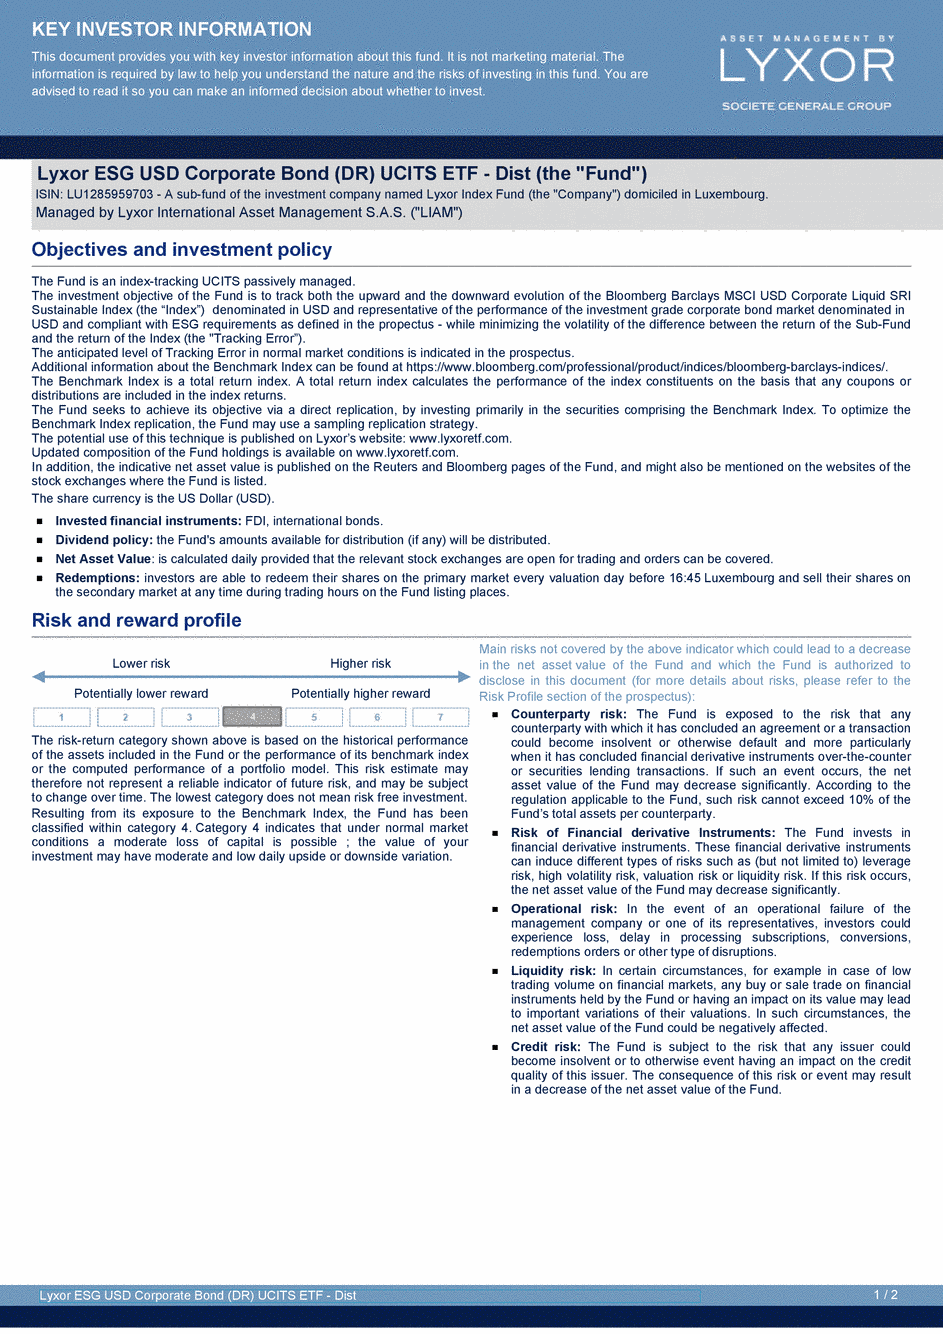 DICI Lyxor ESG USD Corporate Bond (DR) UCITS ETF - Dist - 19/02/2021 - Anglais